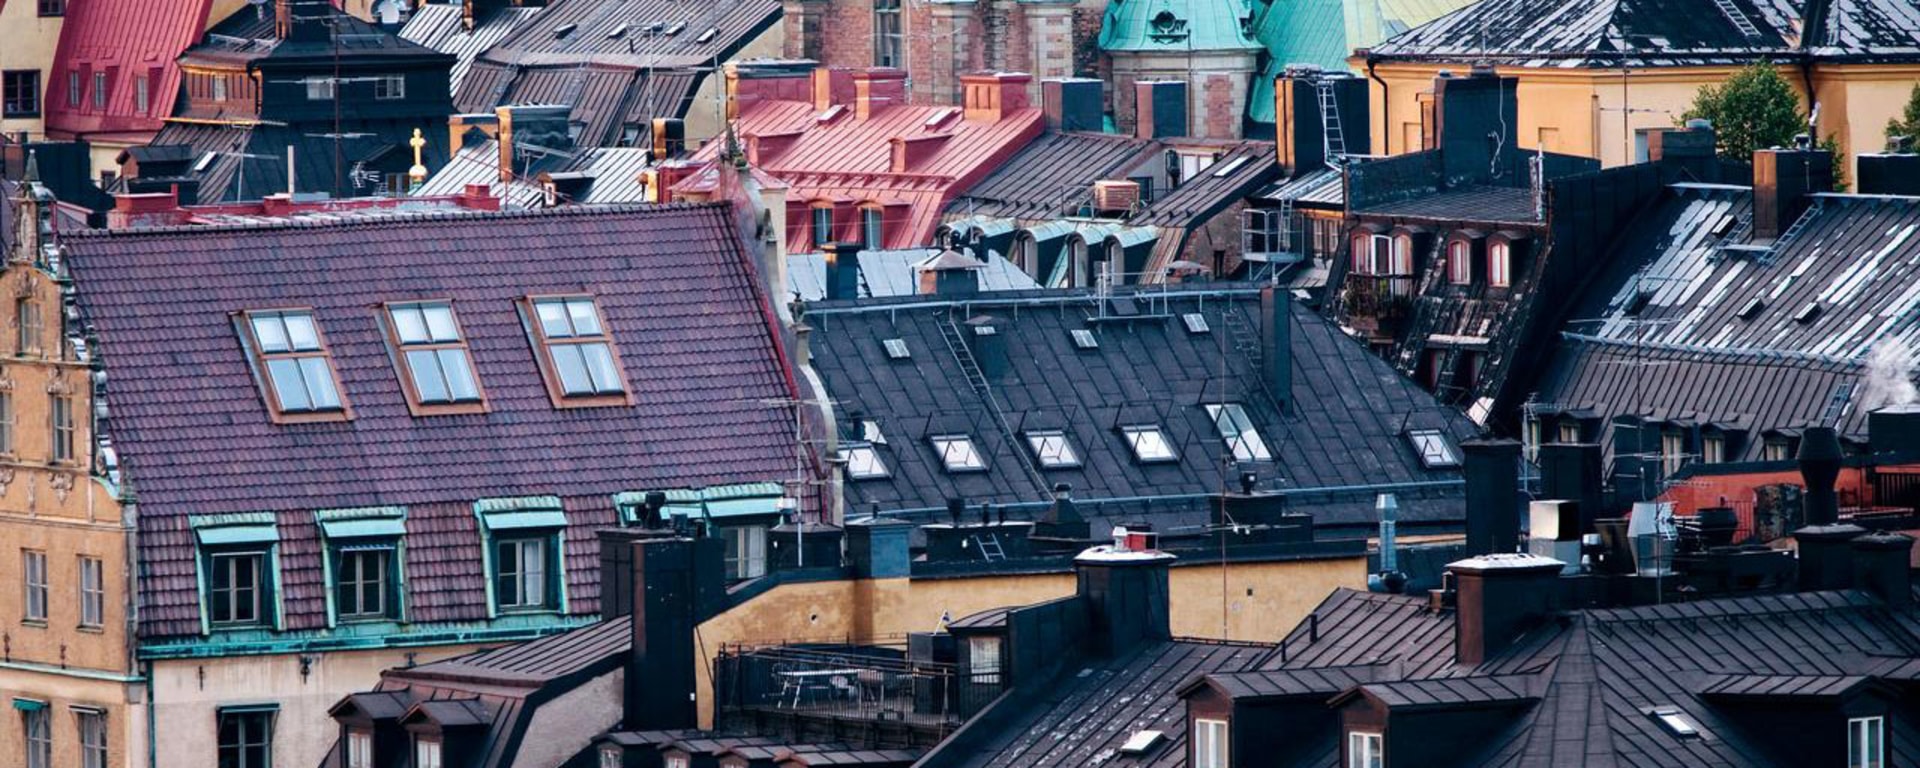 Vontobel in Stockholm - View over the rooftops of Stockholm